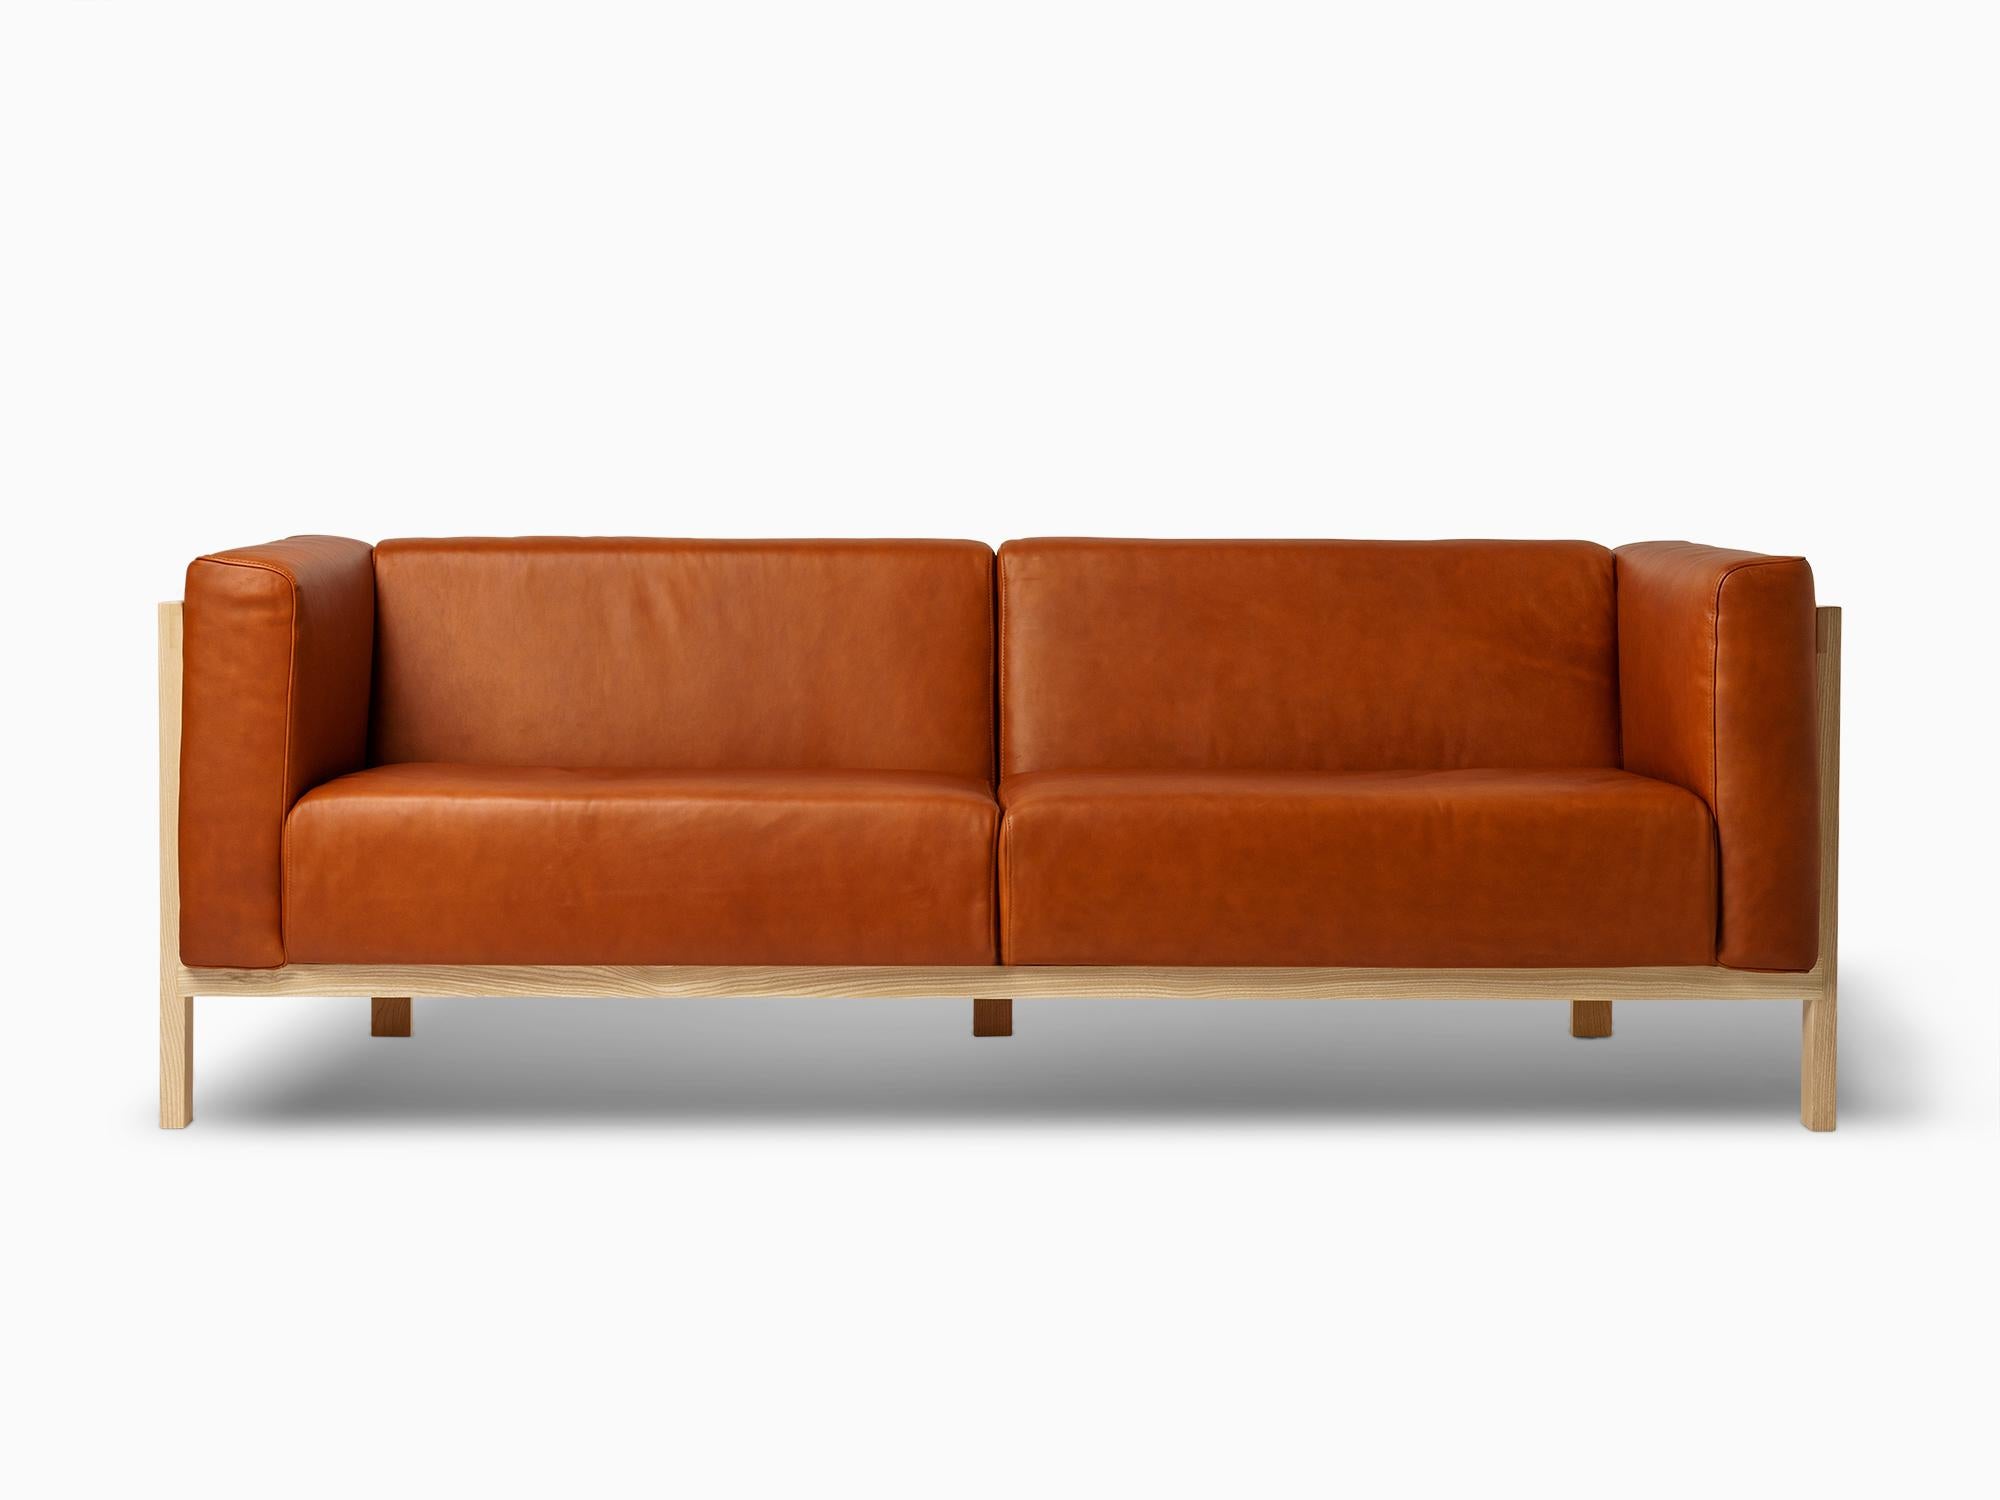 Portuguese Minimalist three seater sofa oak - leather upholstered For Sale